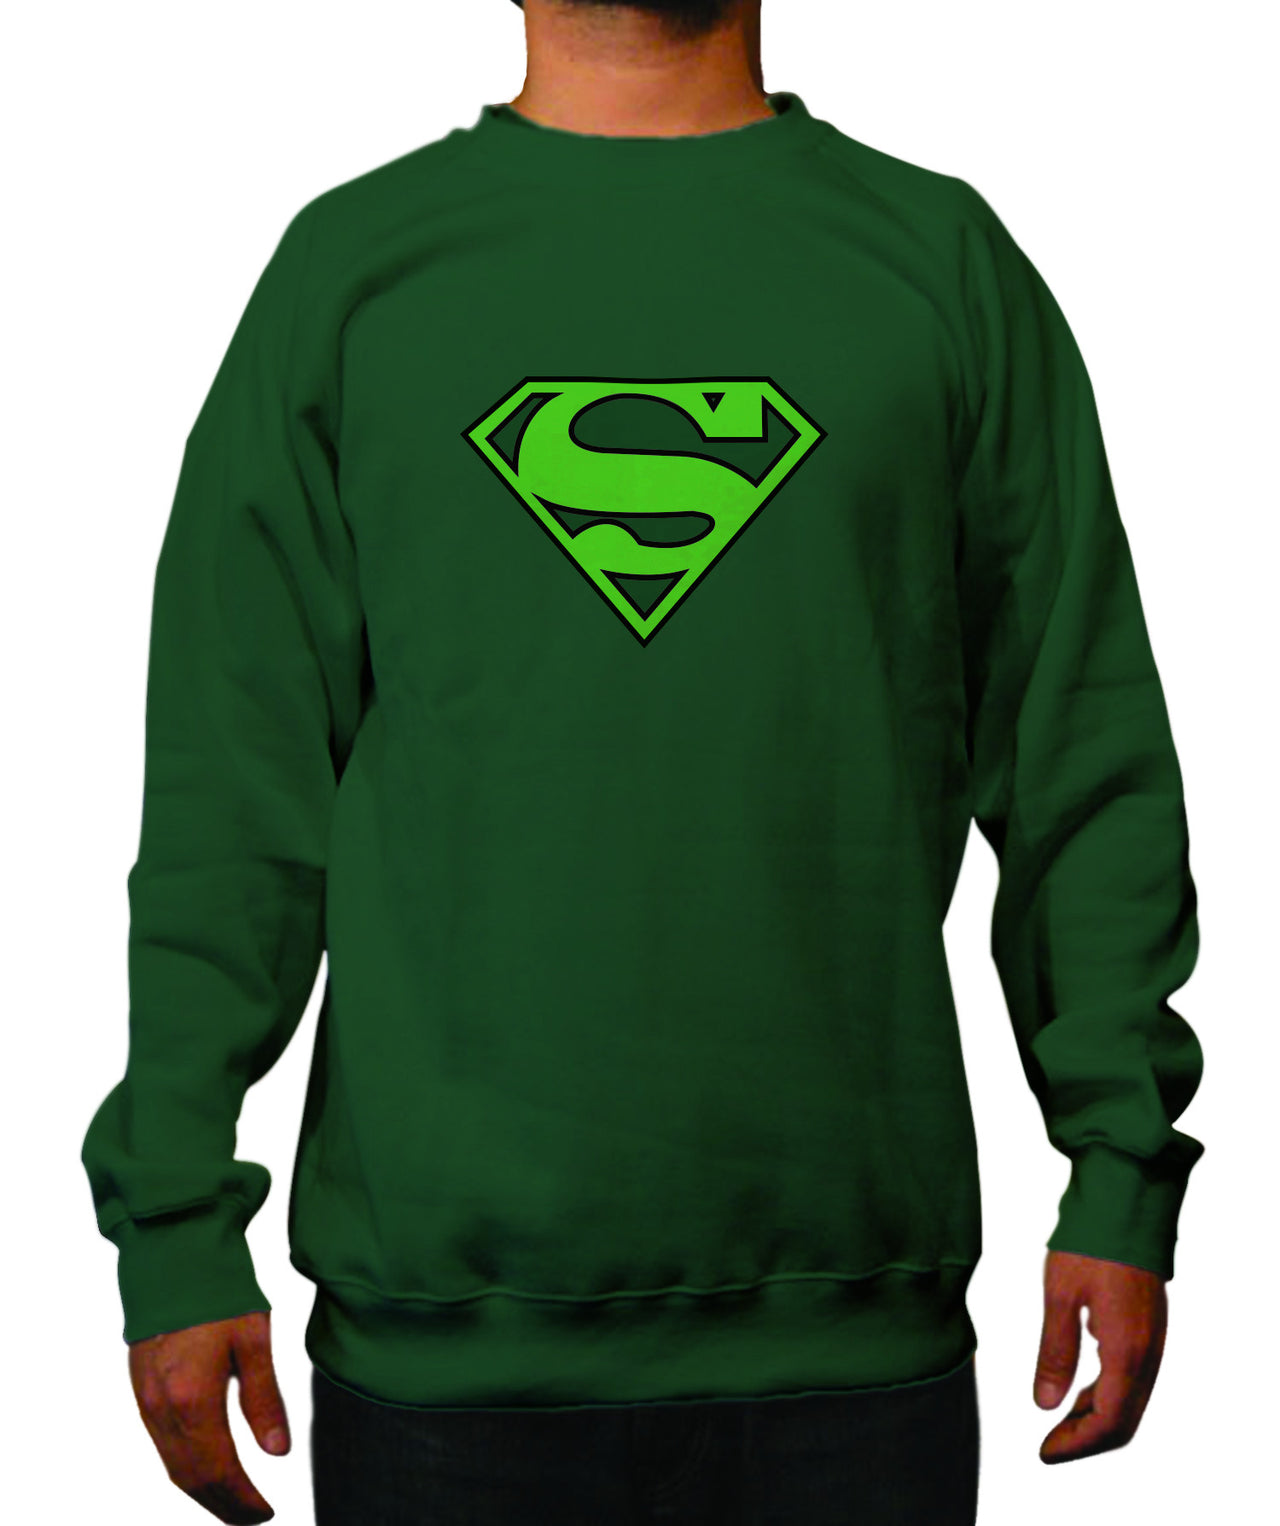 Superman Green Logo on Dark Green Crewneck for Men - TshirtNow.net - 1